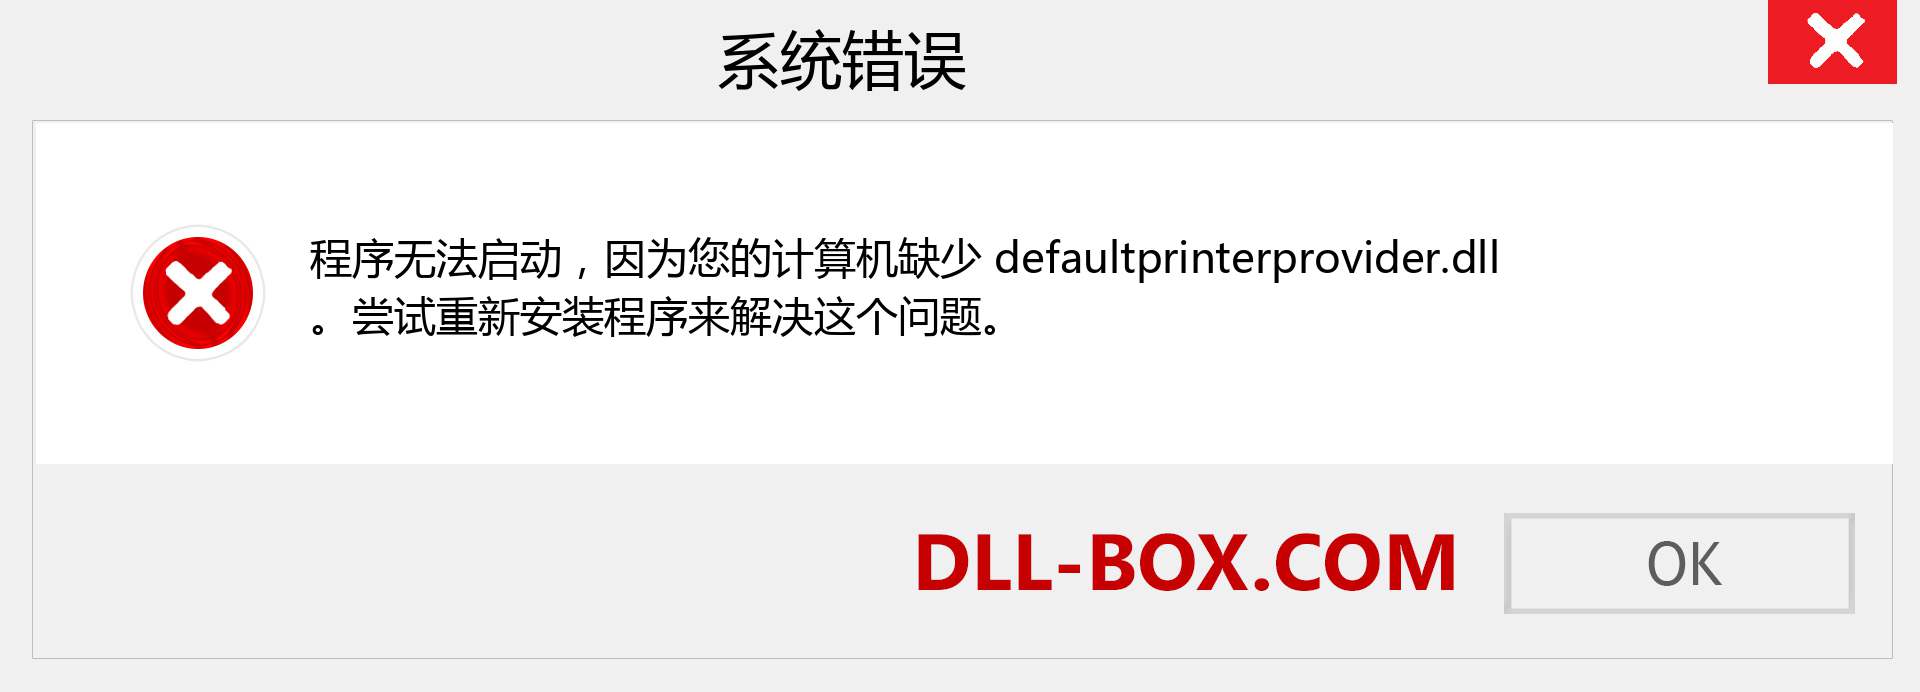 defaultprinterprovider.dll 文件丢失？。 适用于 Windows 7、8、10 的下载 - 修复 Windows、照片、图像上的 defaultprinterprovider dll 丢失错误